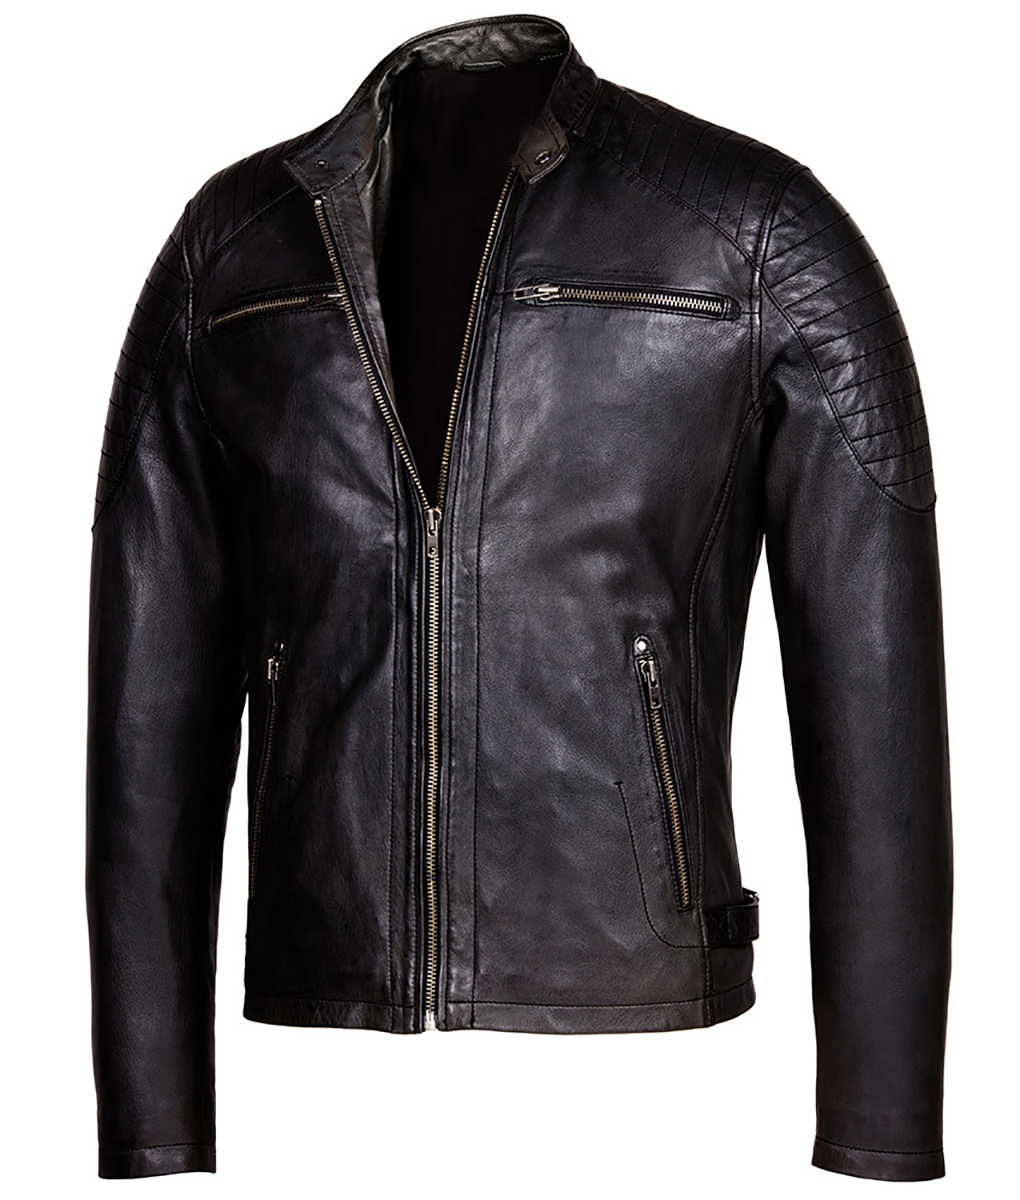 Blacky Cafe Racer Motorcycle Leather Jacket - TheLeatherCity